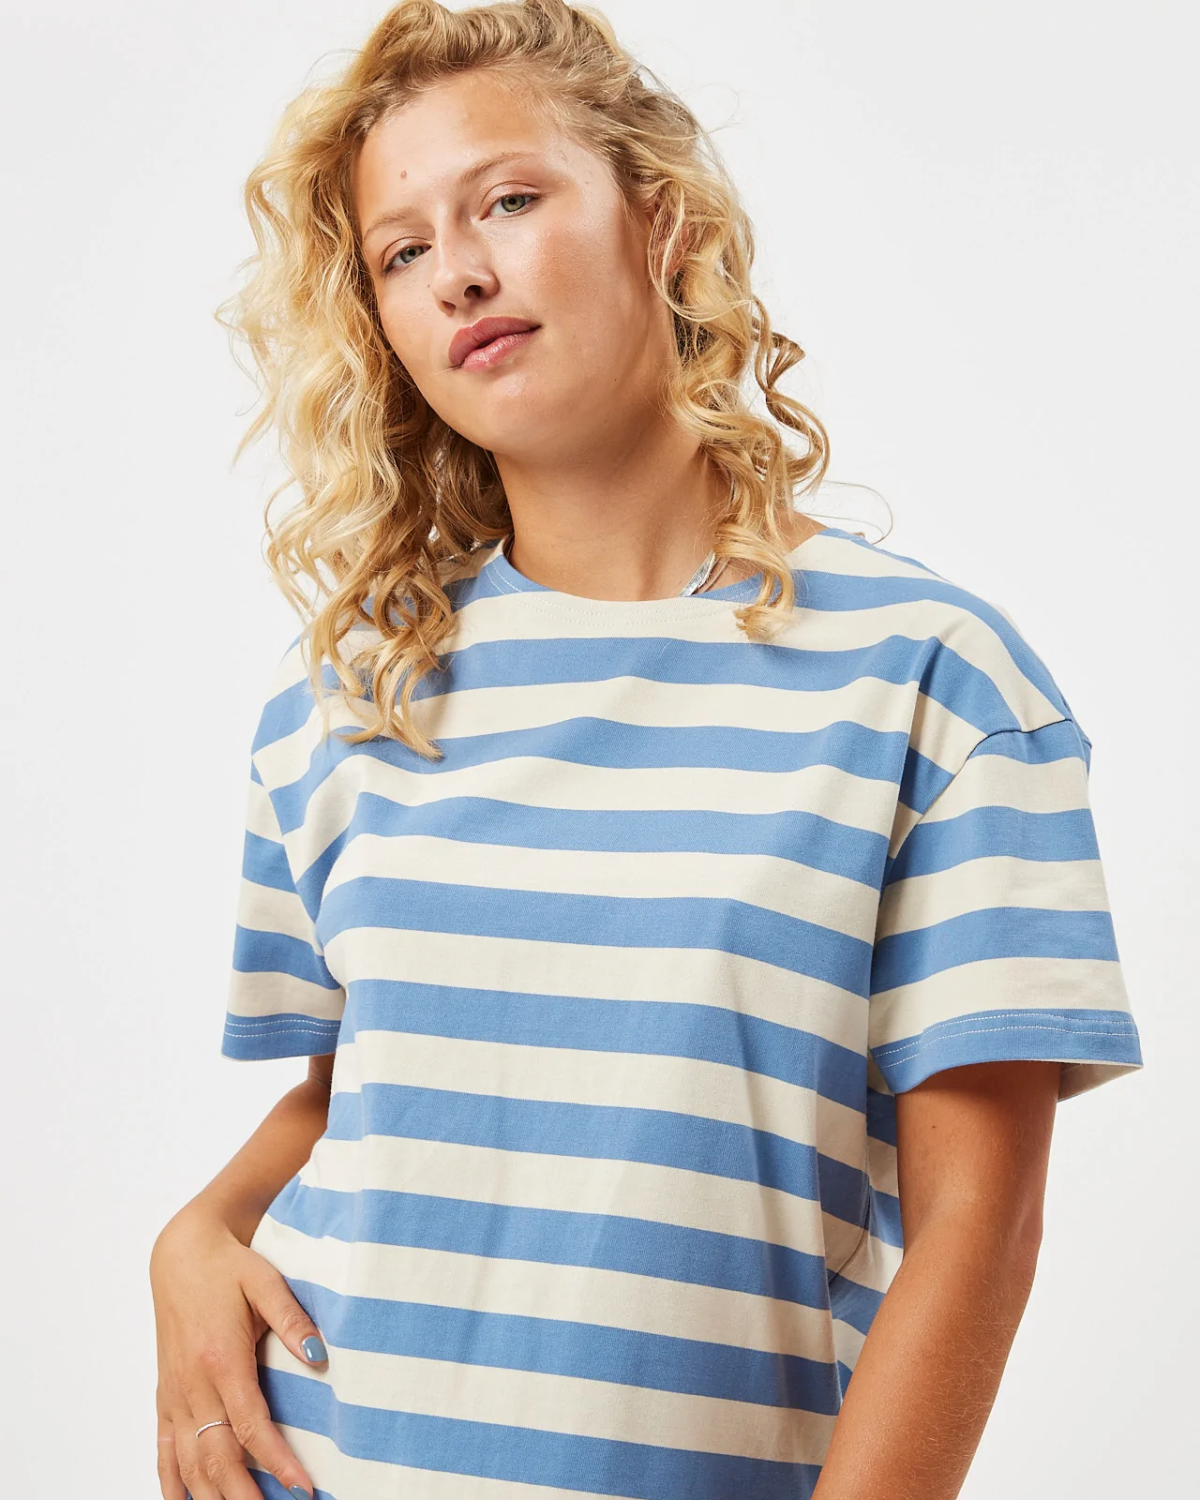 Yenna T-shirt Blå/Hvit Stripete - Minimum